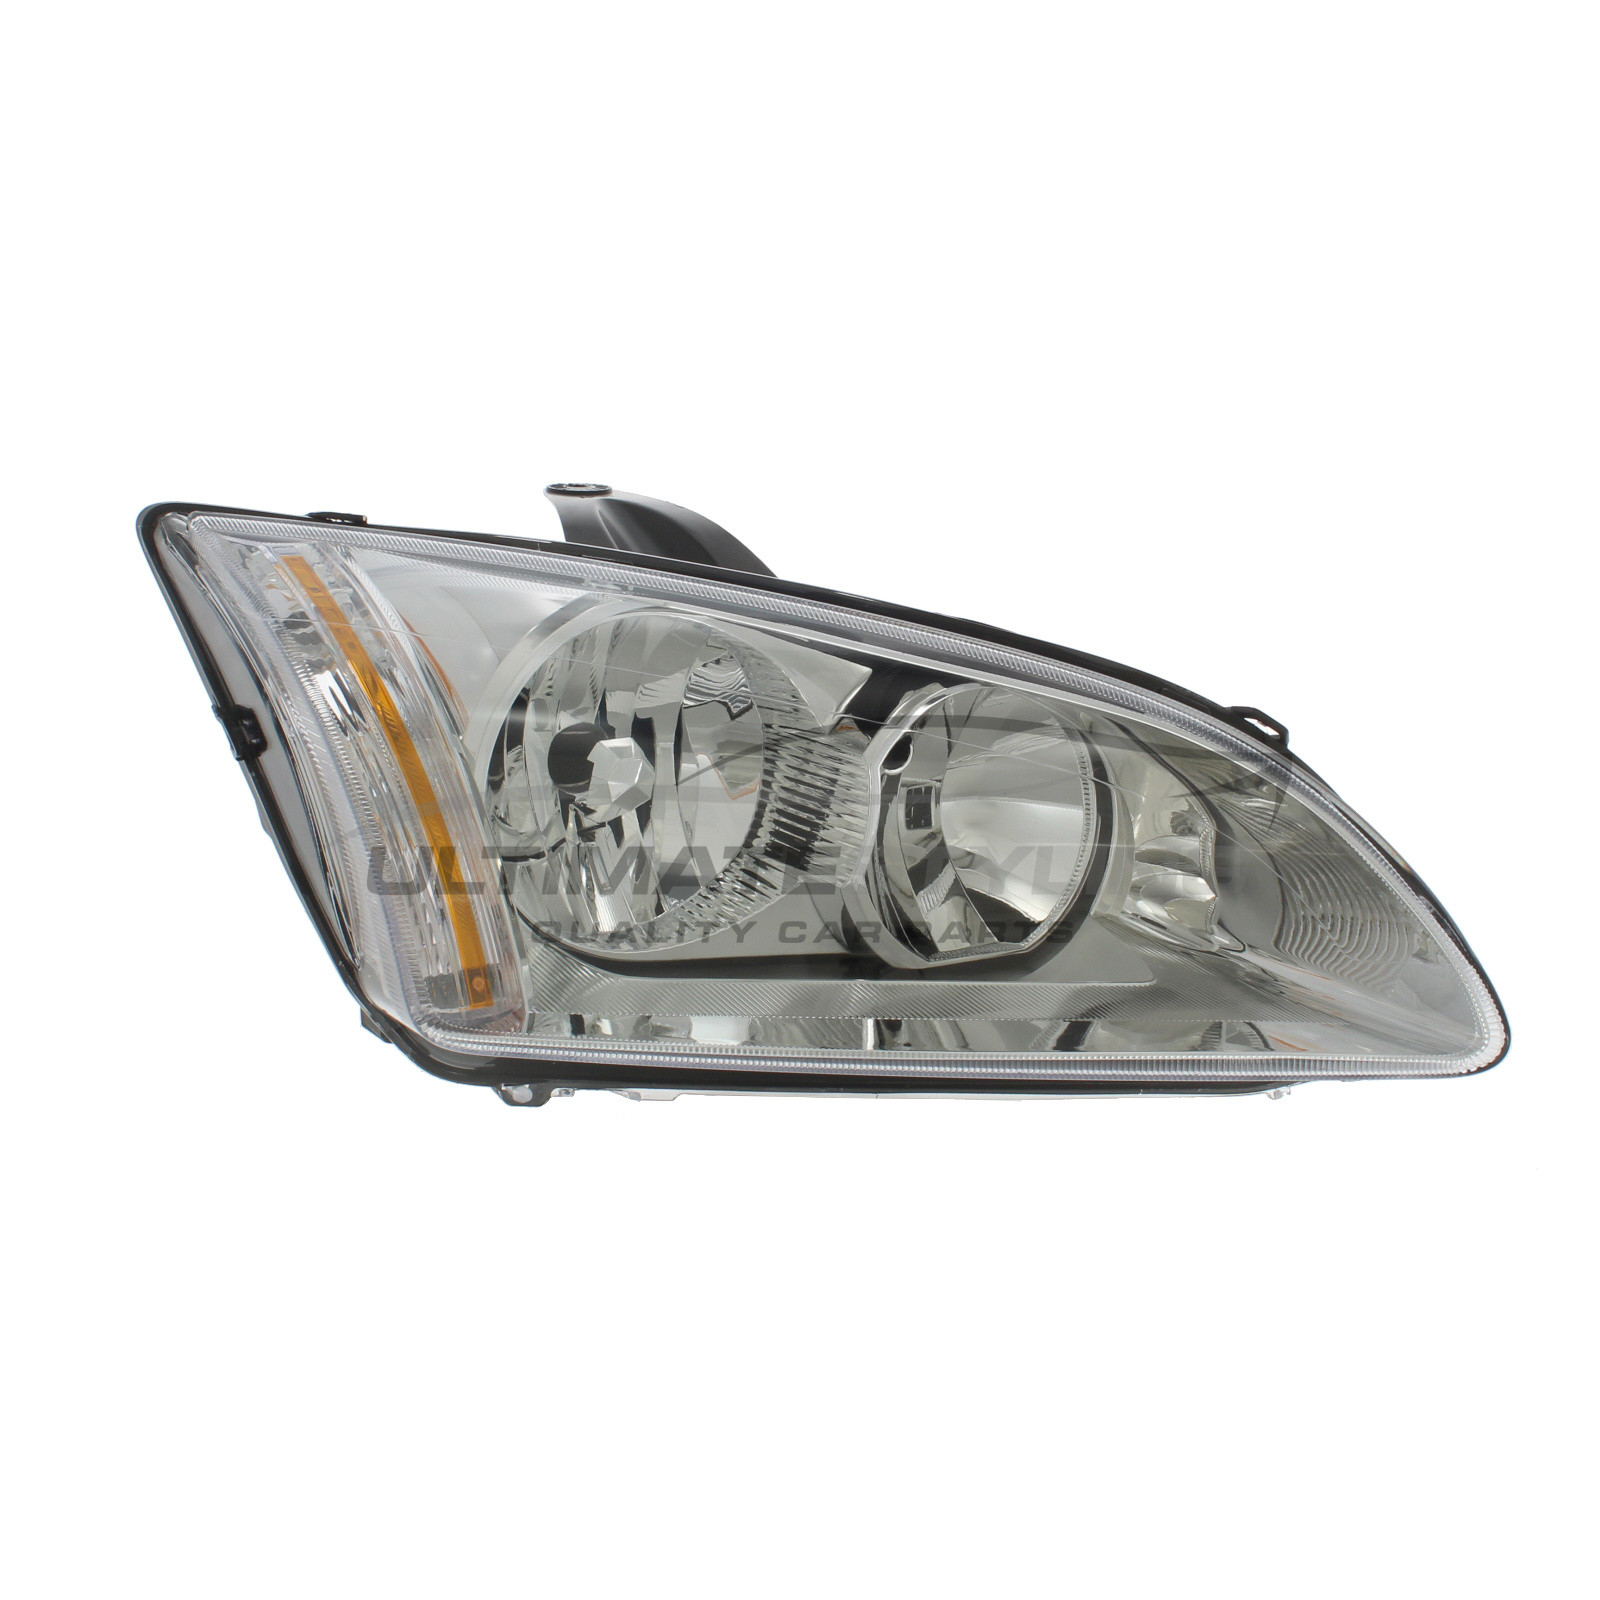 Headlight / Headlamp for Ford Focus